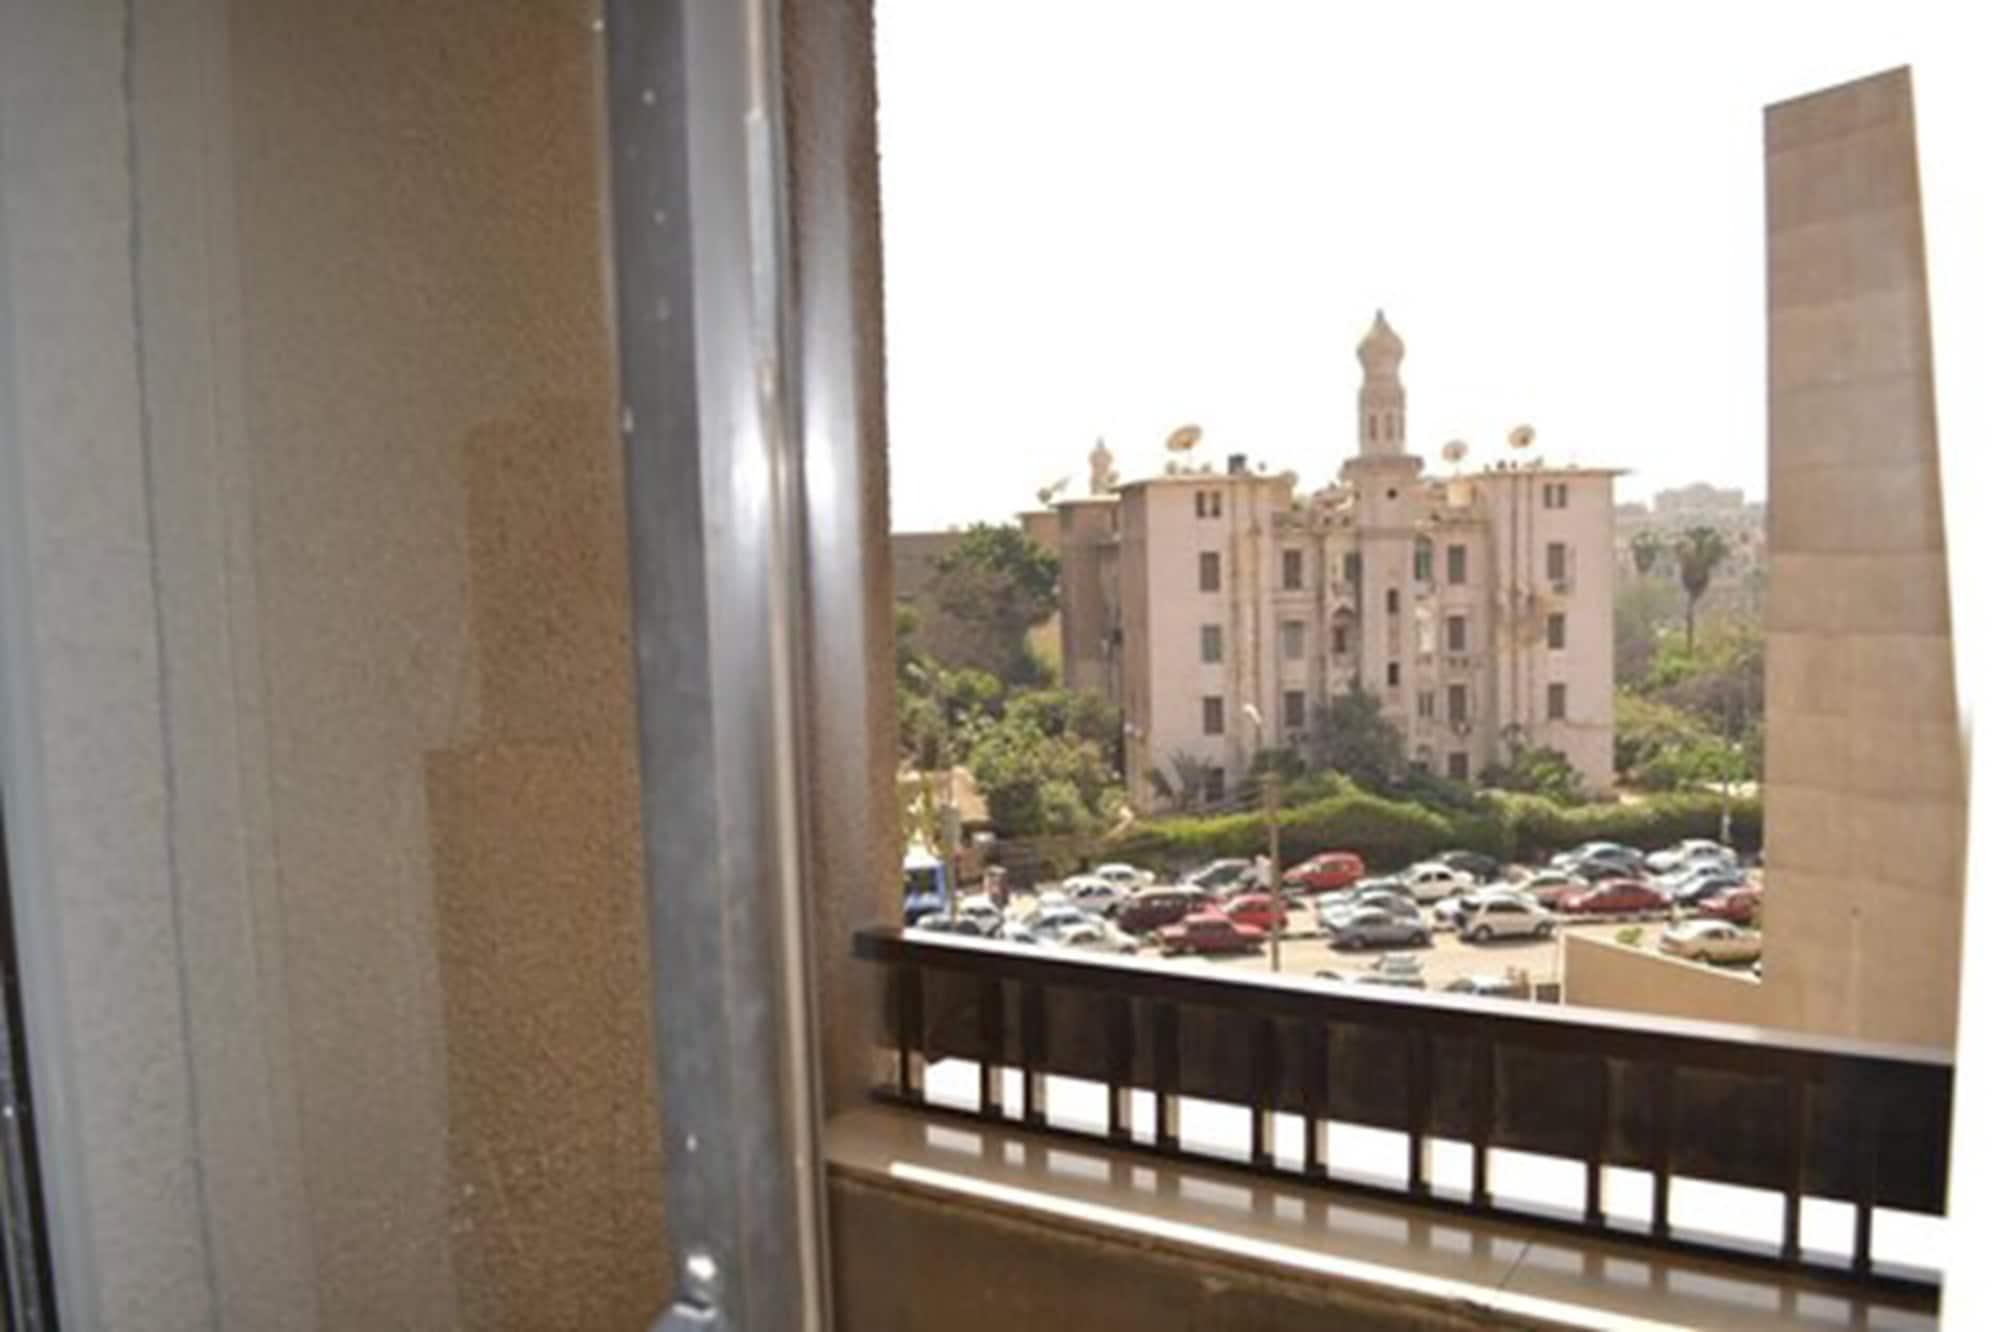 Beirut Hotel Caïro Buitenkant foto